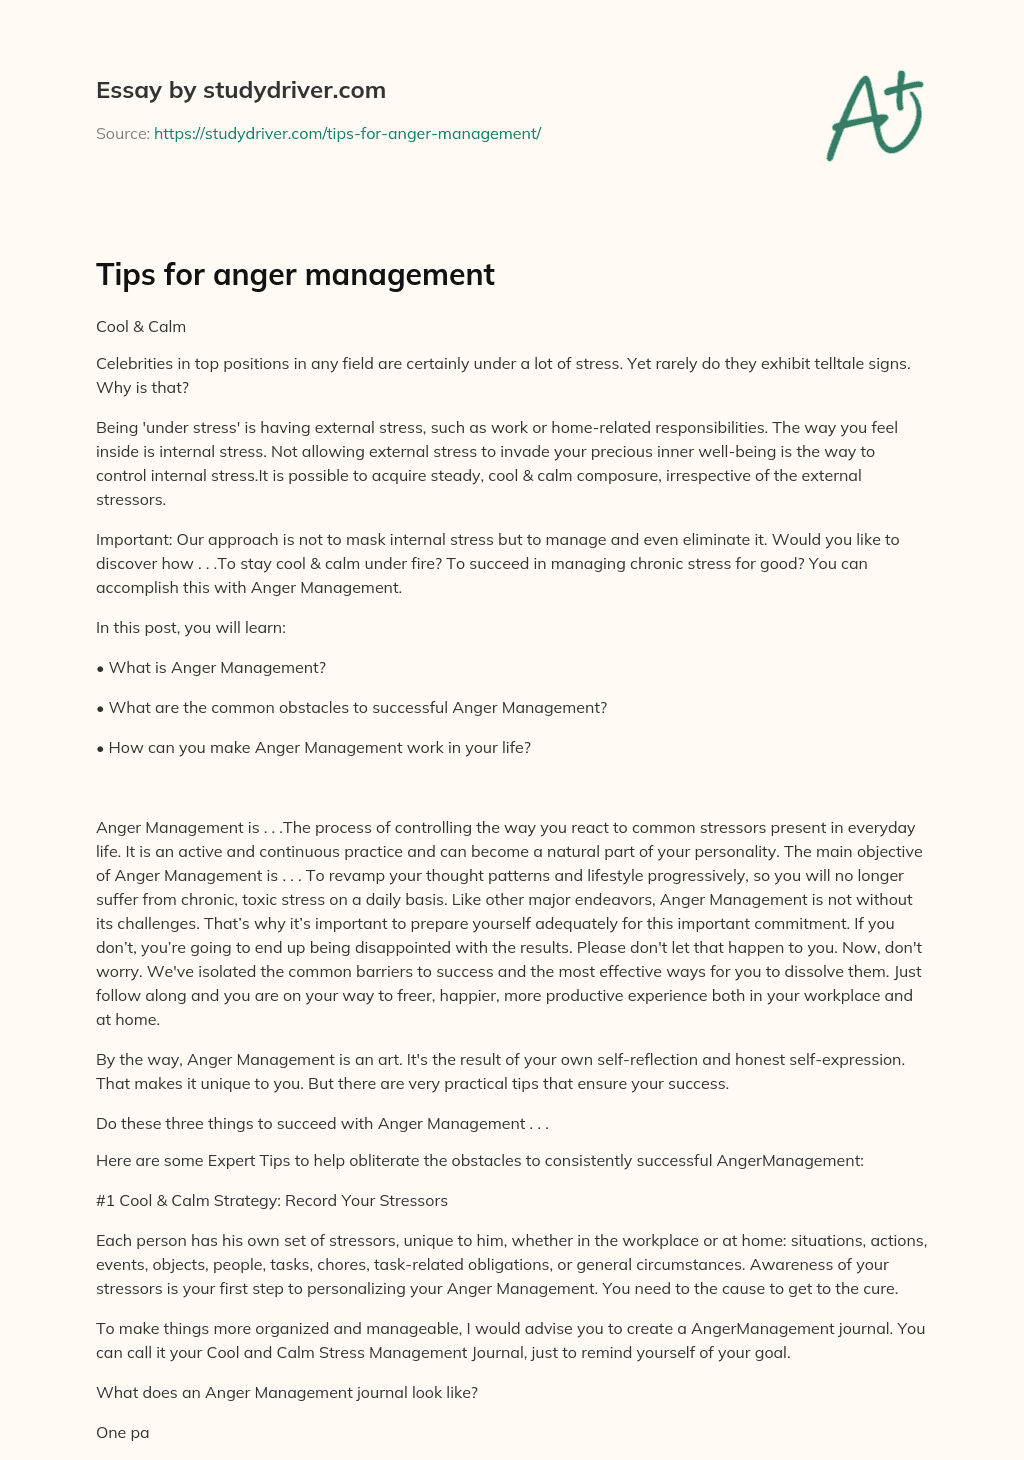 Tips for Anger Management essay